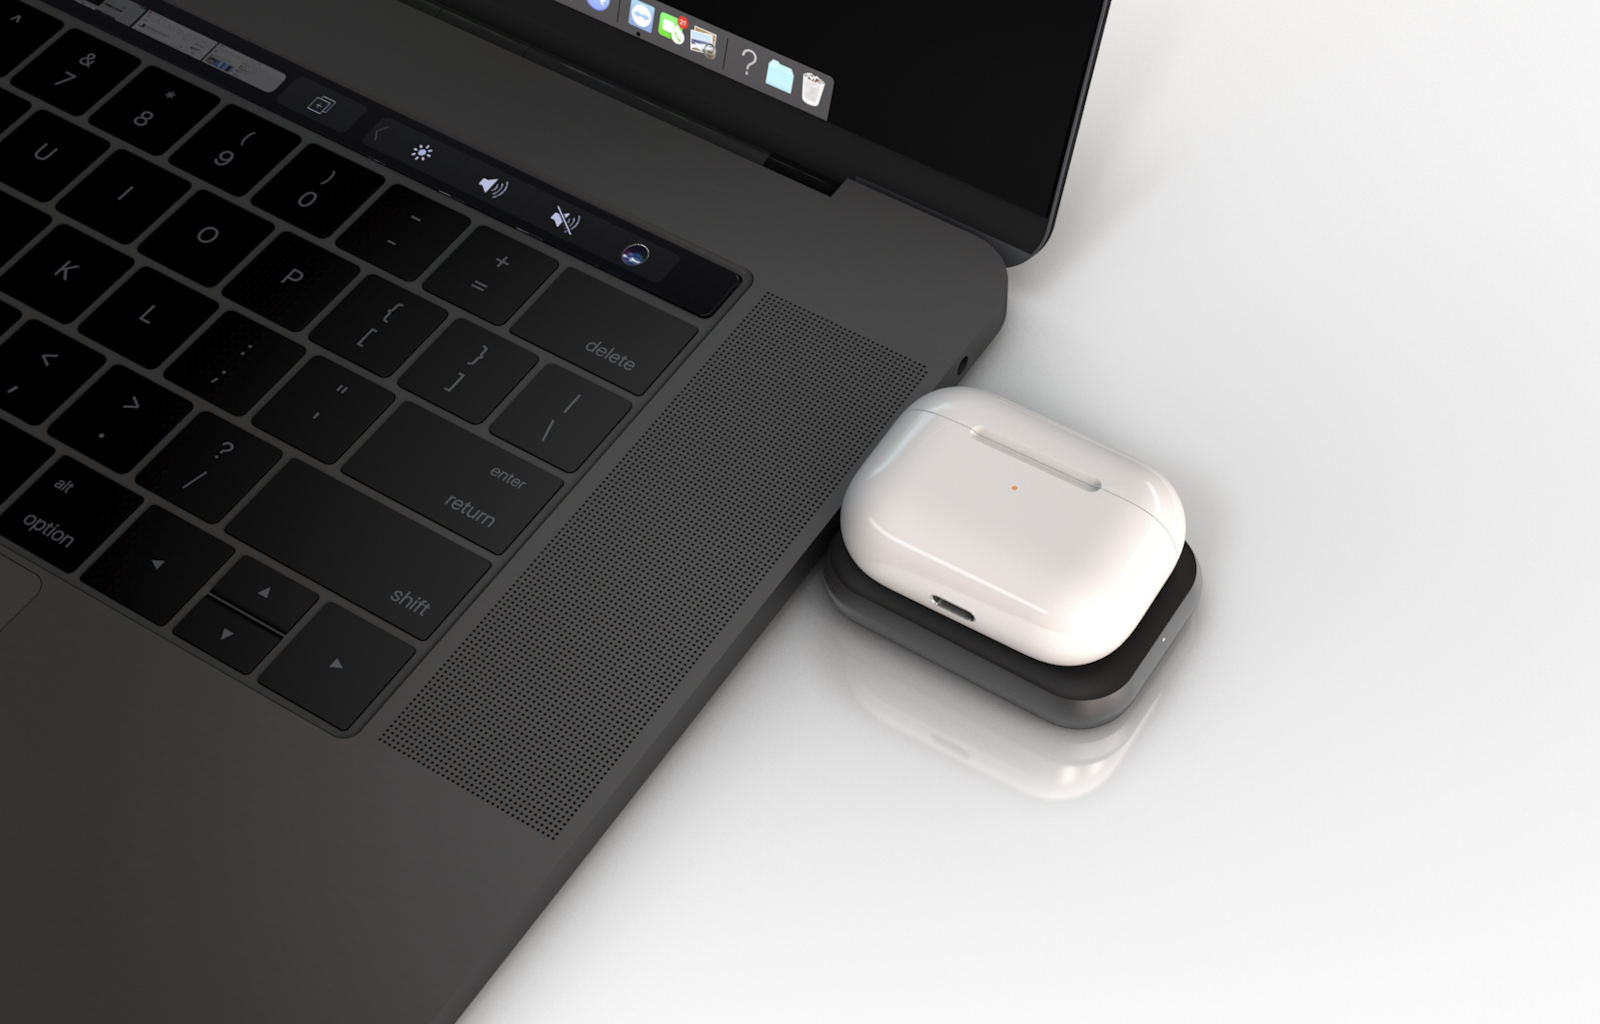 Zens Aluminium USB C stick for AirPods connected to MacBook